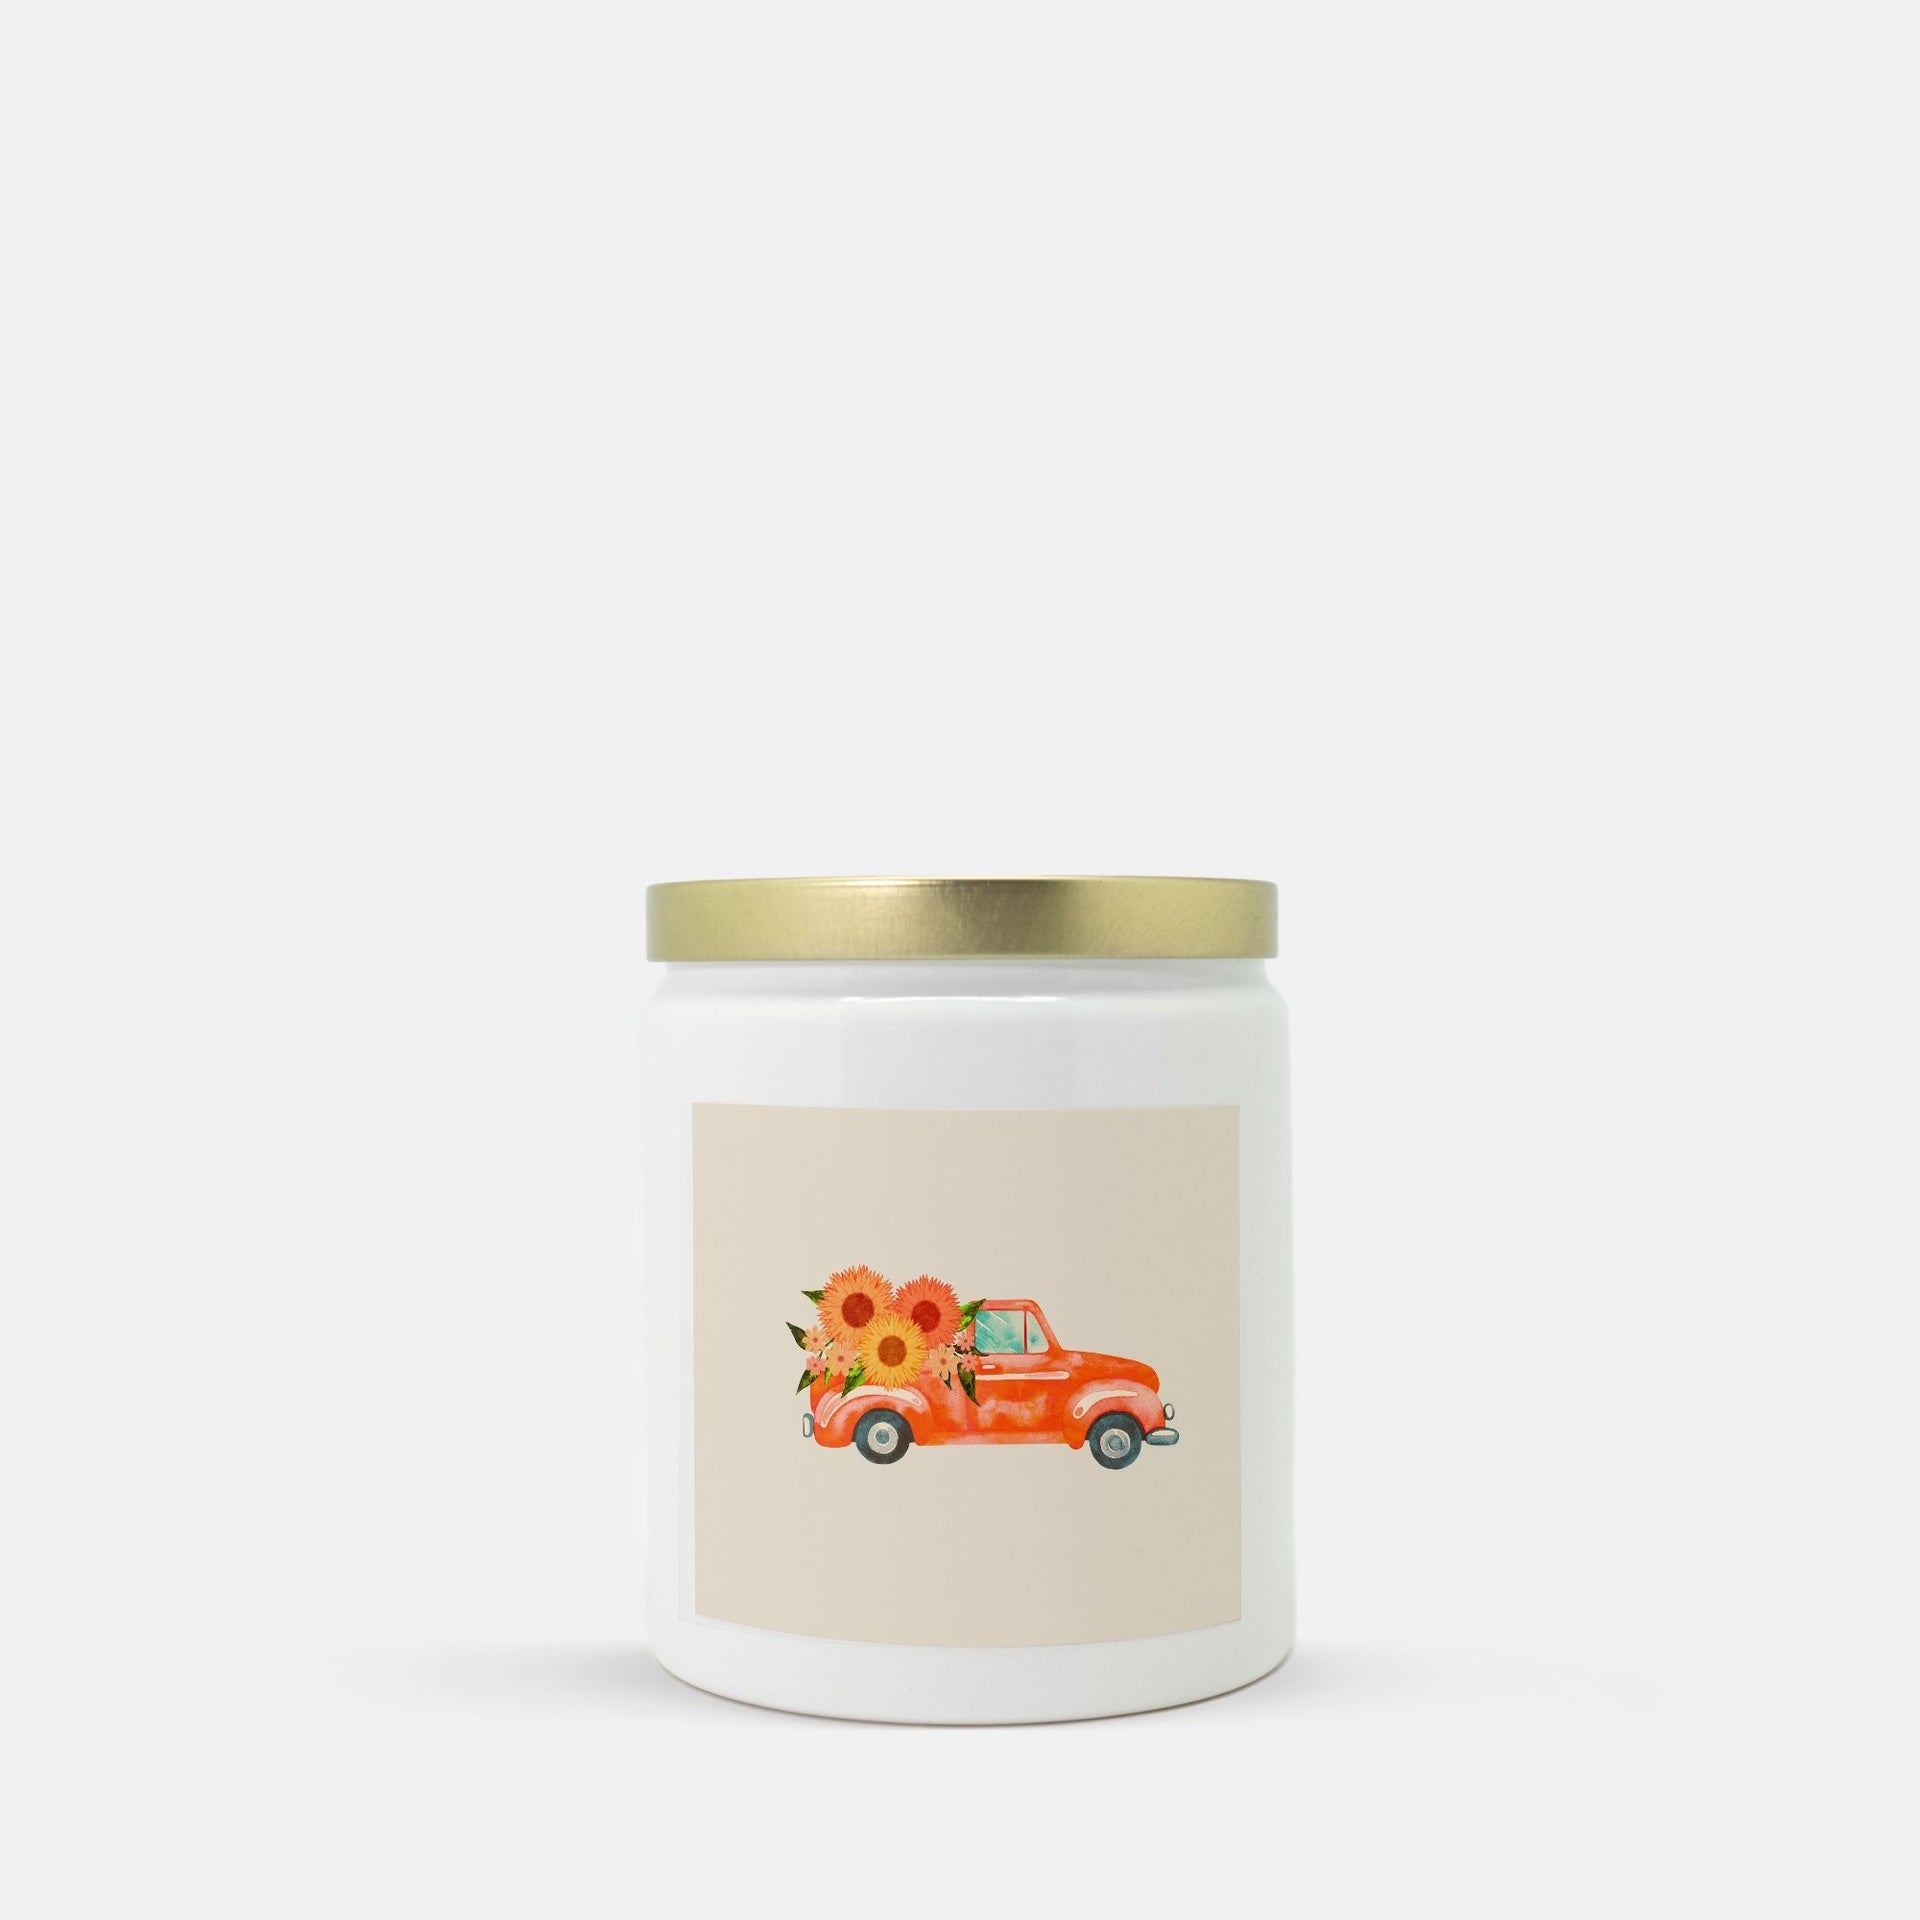 Lifestyle Details - Bright Orange Rustic Truck Ceramic Candle - Gold Lid - Vanilla Bean